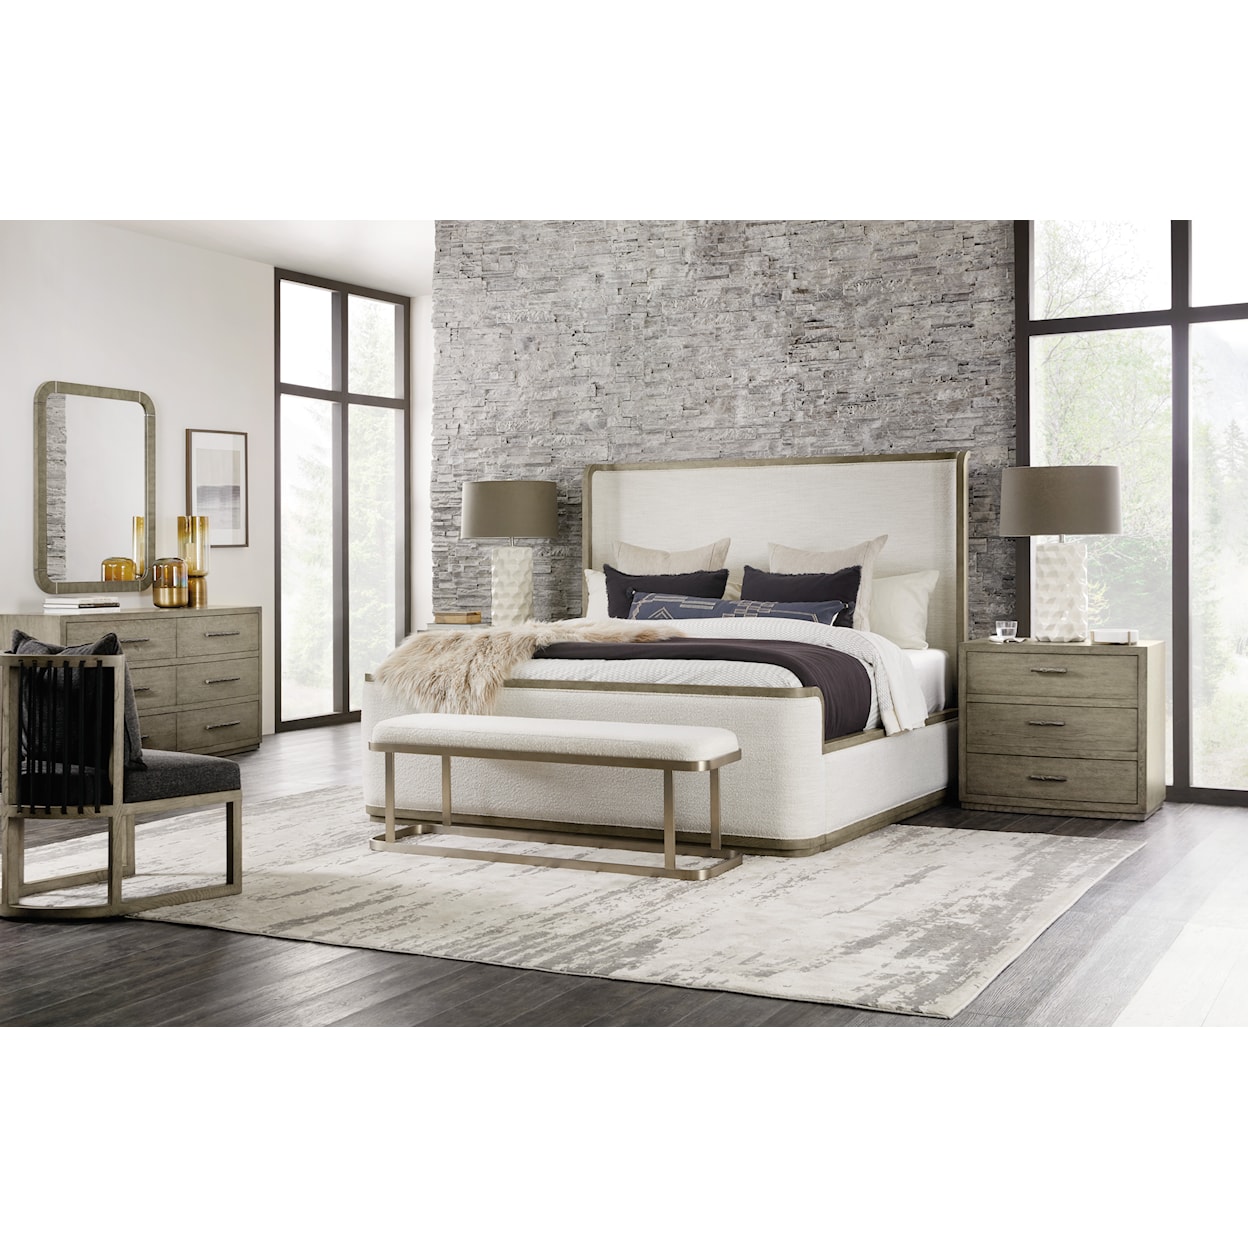 Hooker Furniture Linville Falls Queen Bed